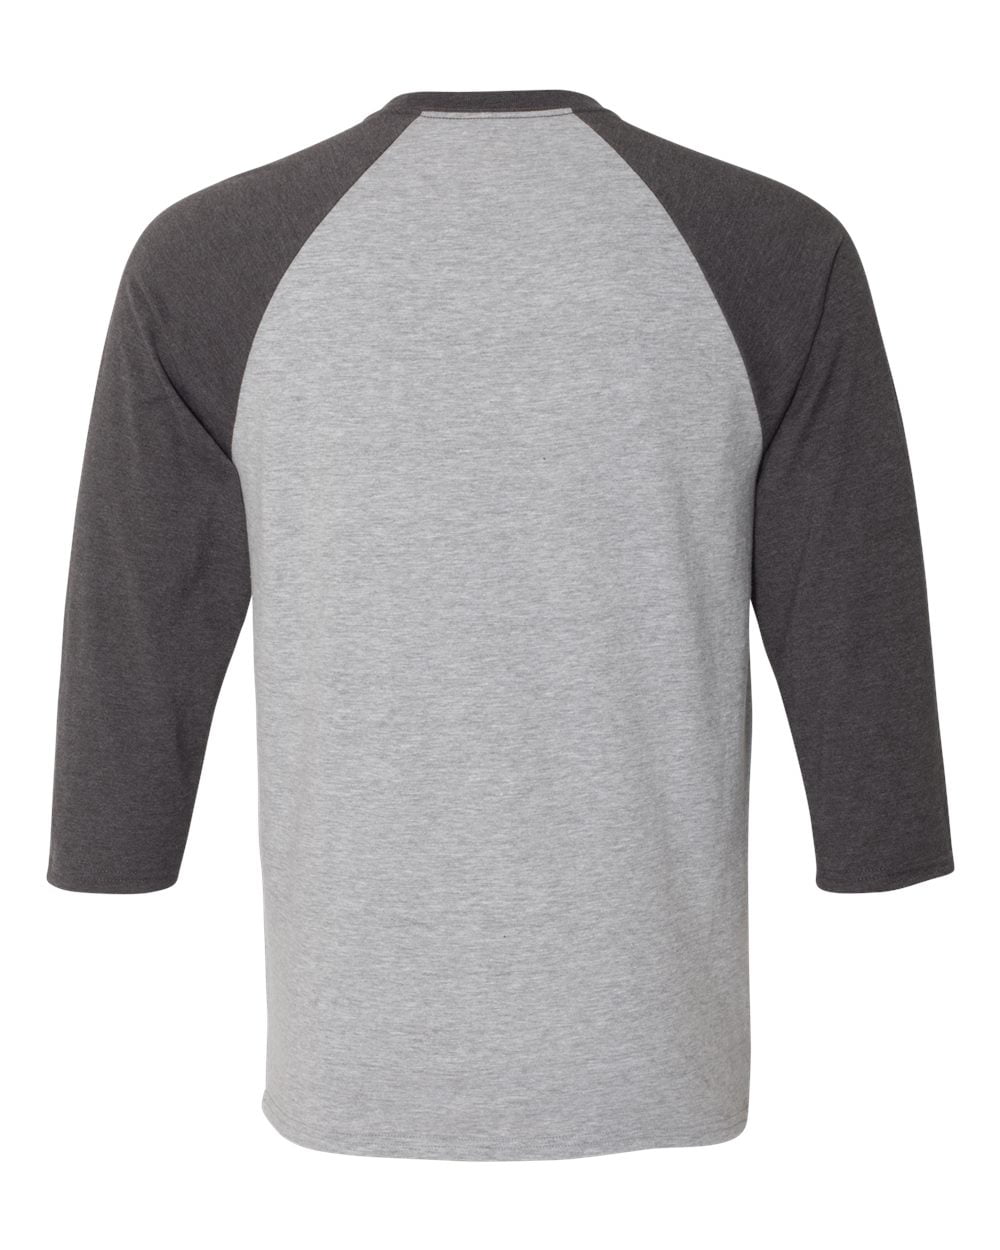 grey baseball shirt